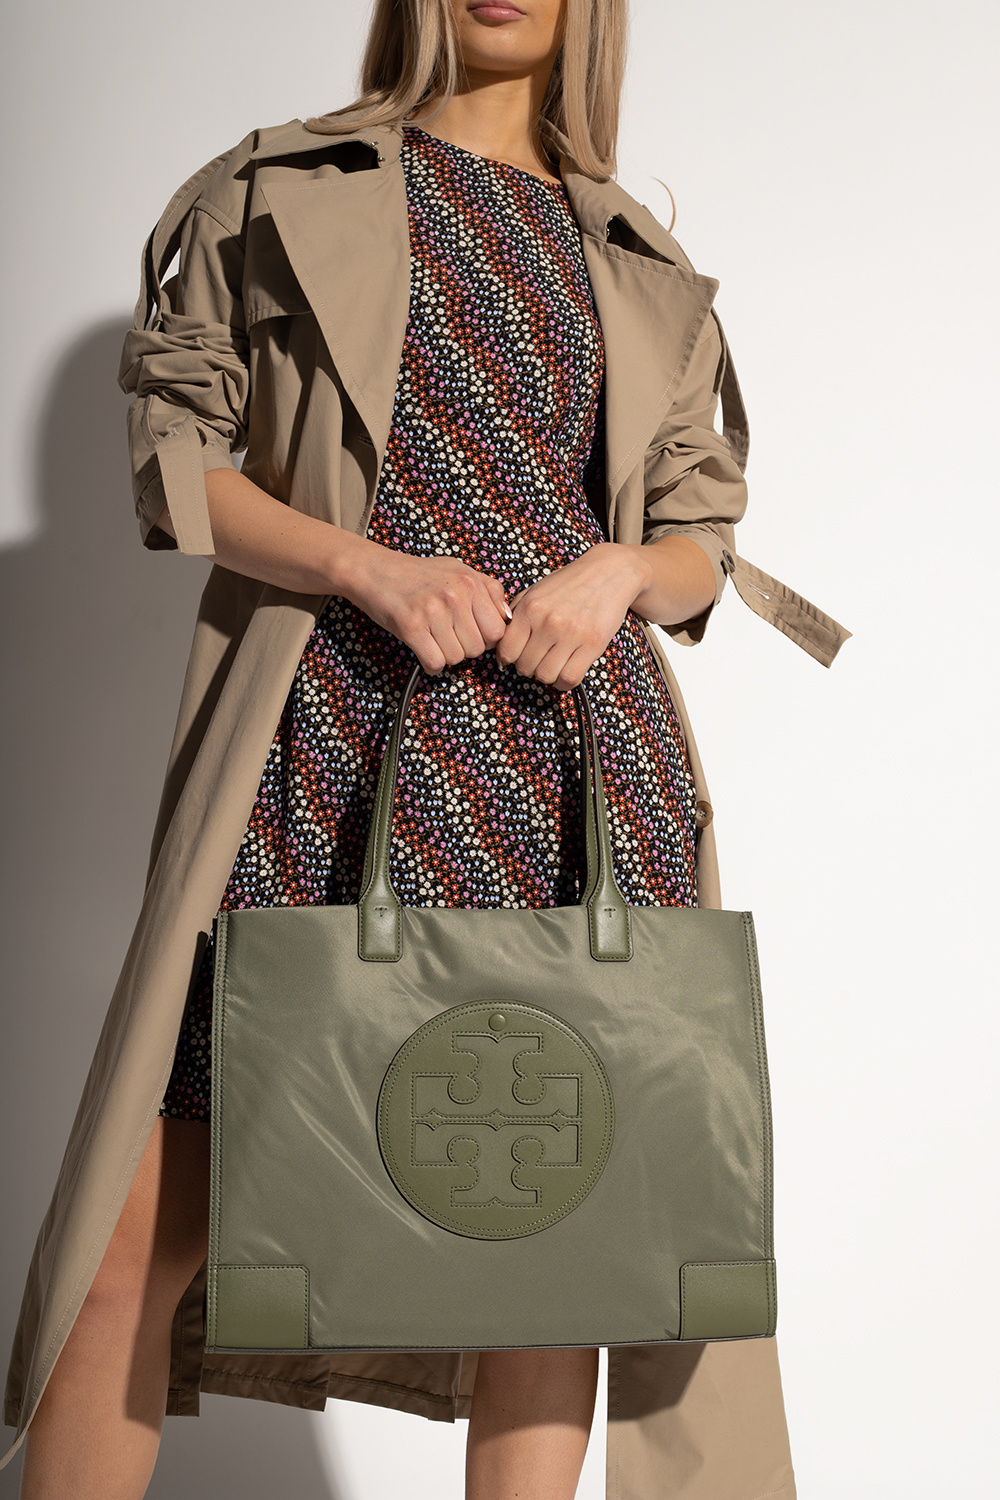 Tory Burch embroidered East West handbag purse 